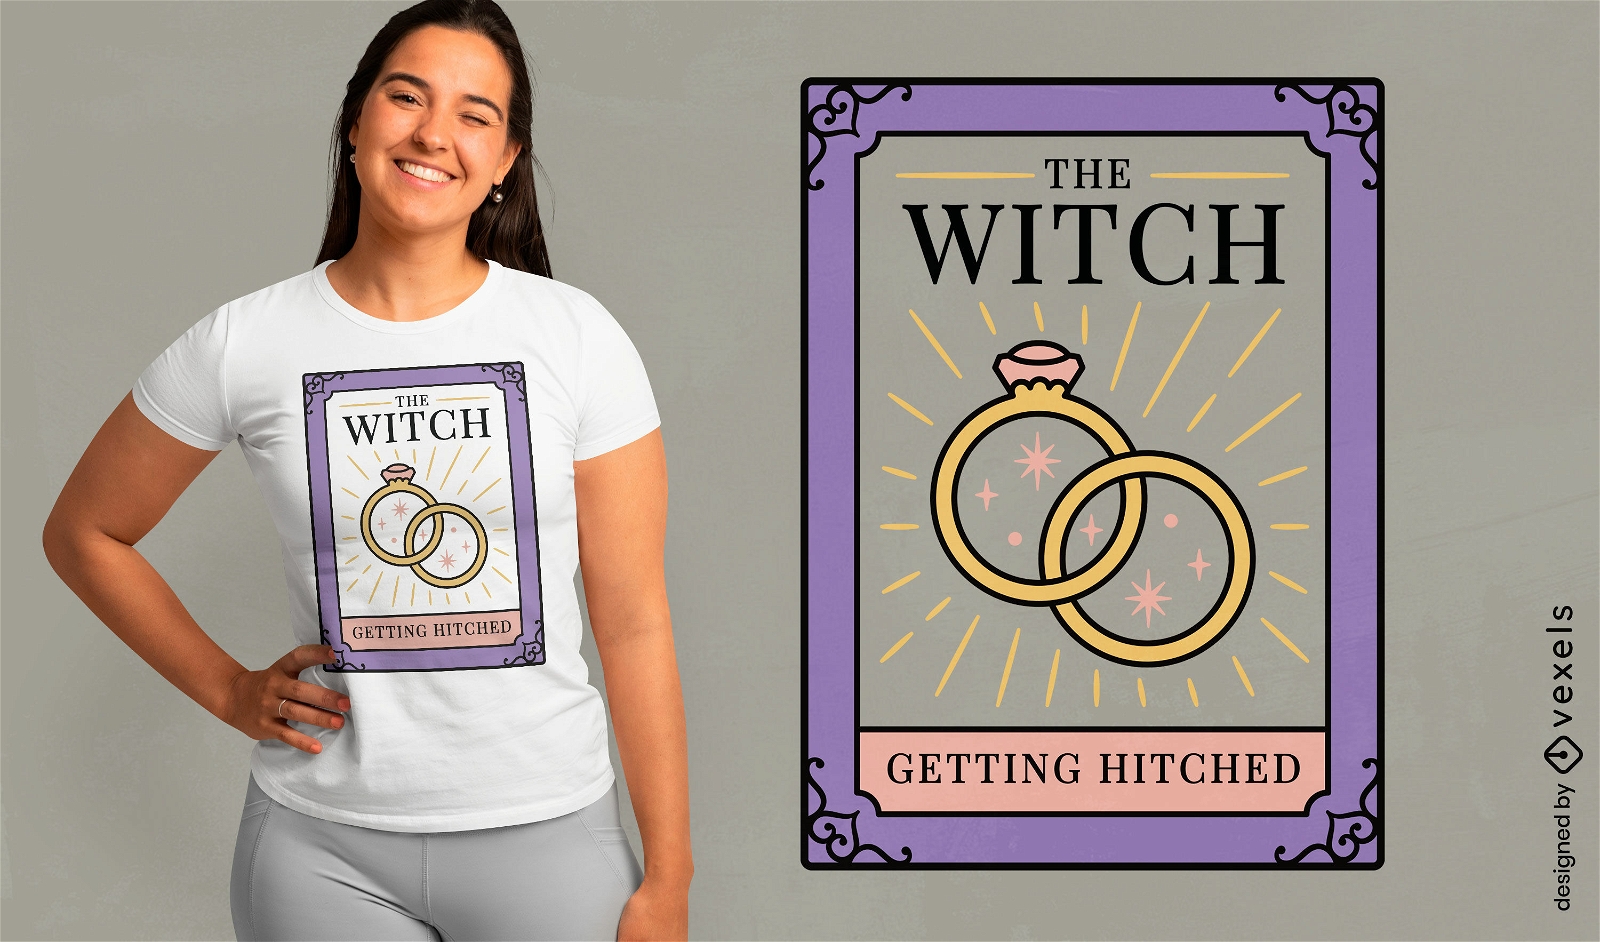 Witch wedding announcement t-shirt design